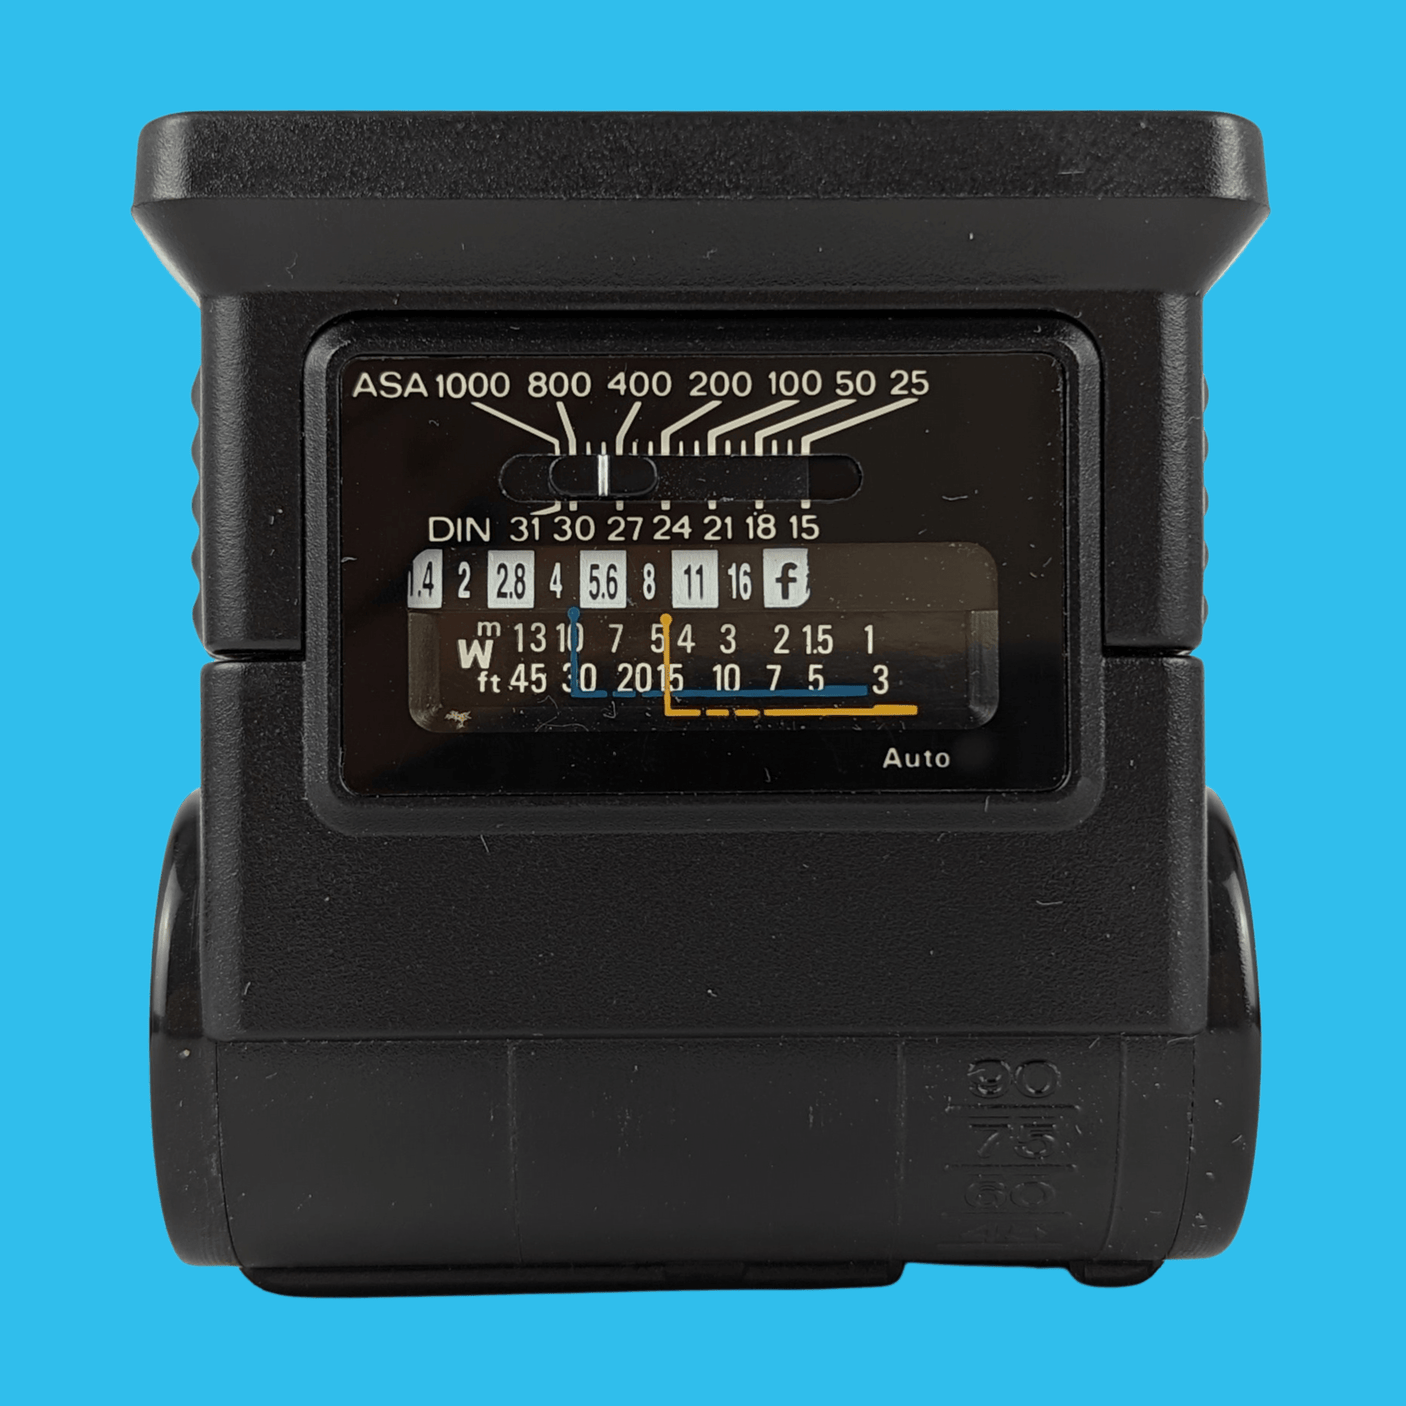 Centon FG 3.0 External Flash Unit for 35mm Film Camera